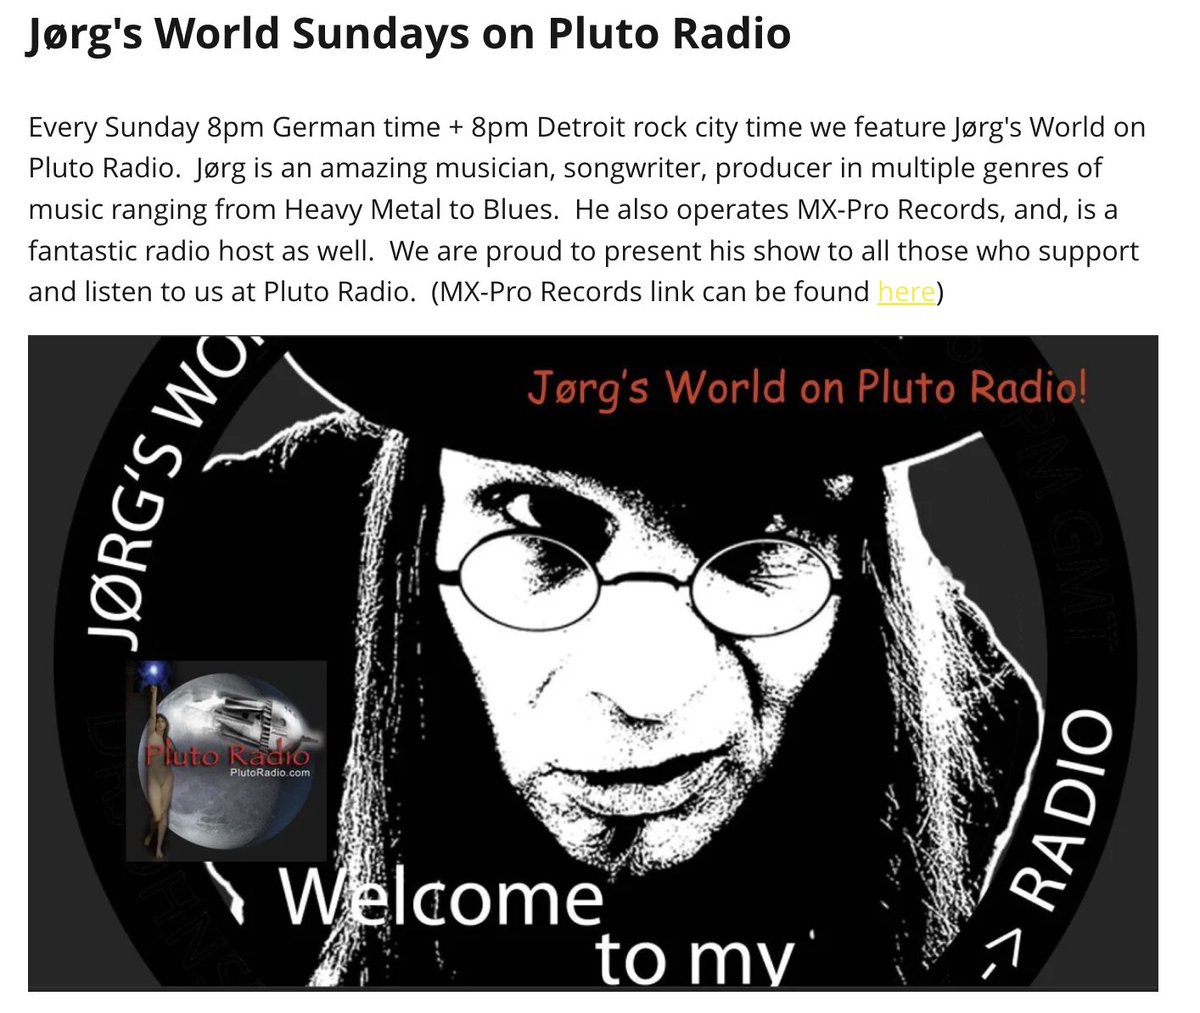 the maestro hosts his fantastic radio program today 8pm German time + 8pm Detroit time. plutoradio.com